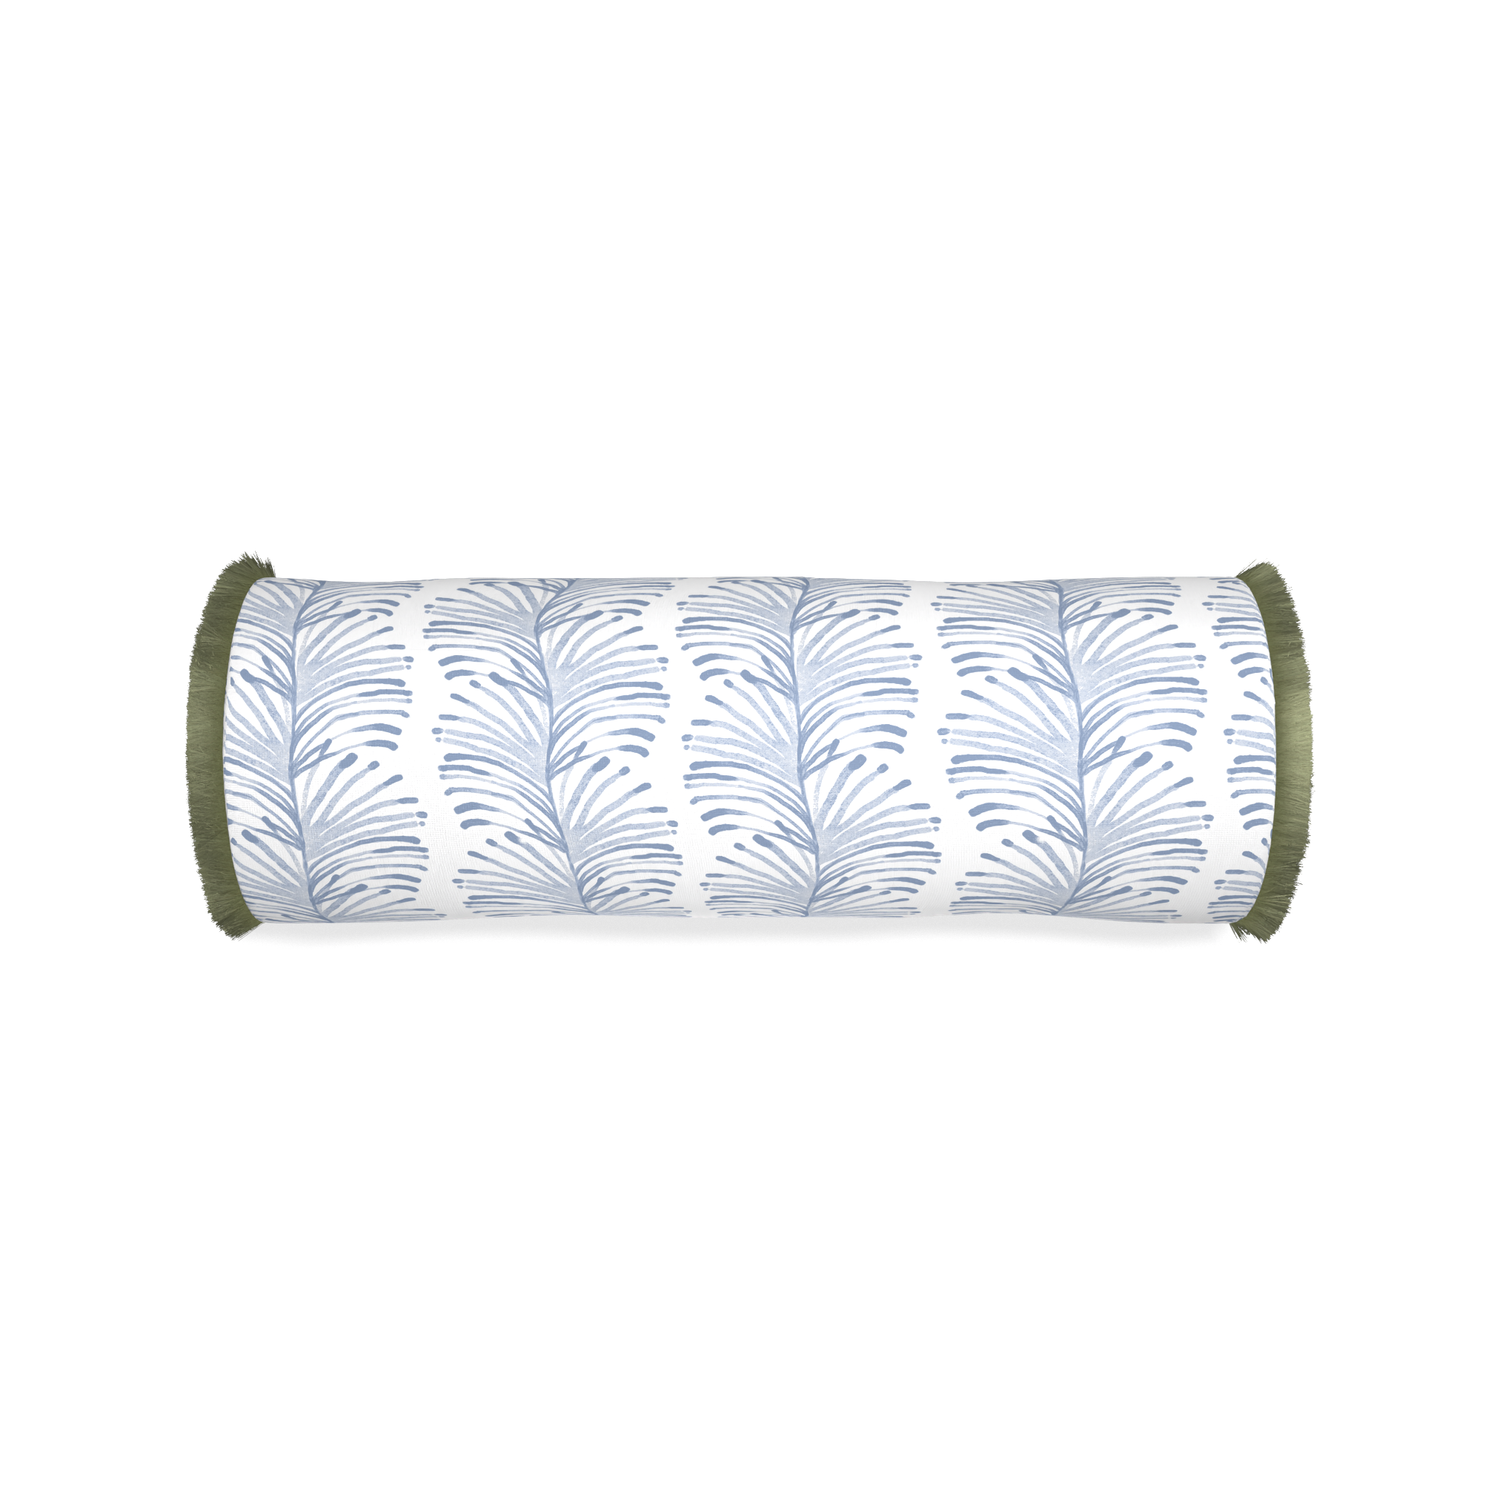 Bolster emma sky custom sky blue botanical stripepillow with sage fringe on white background